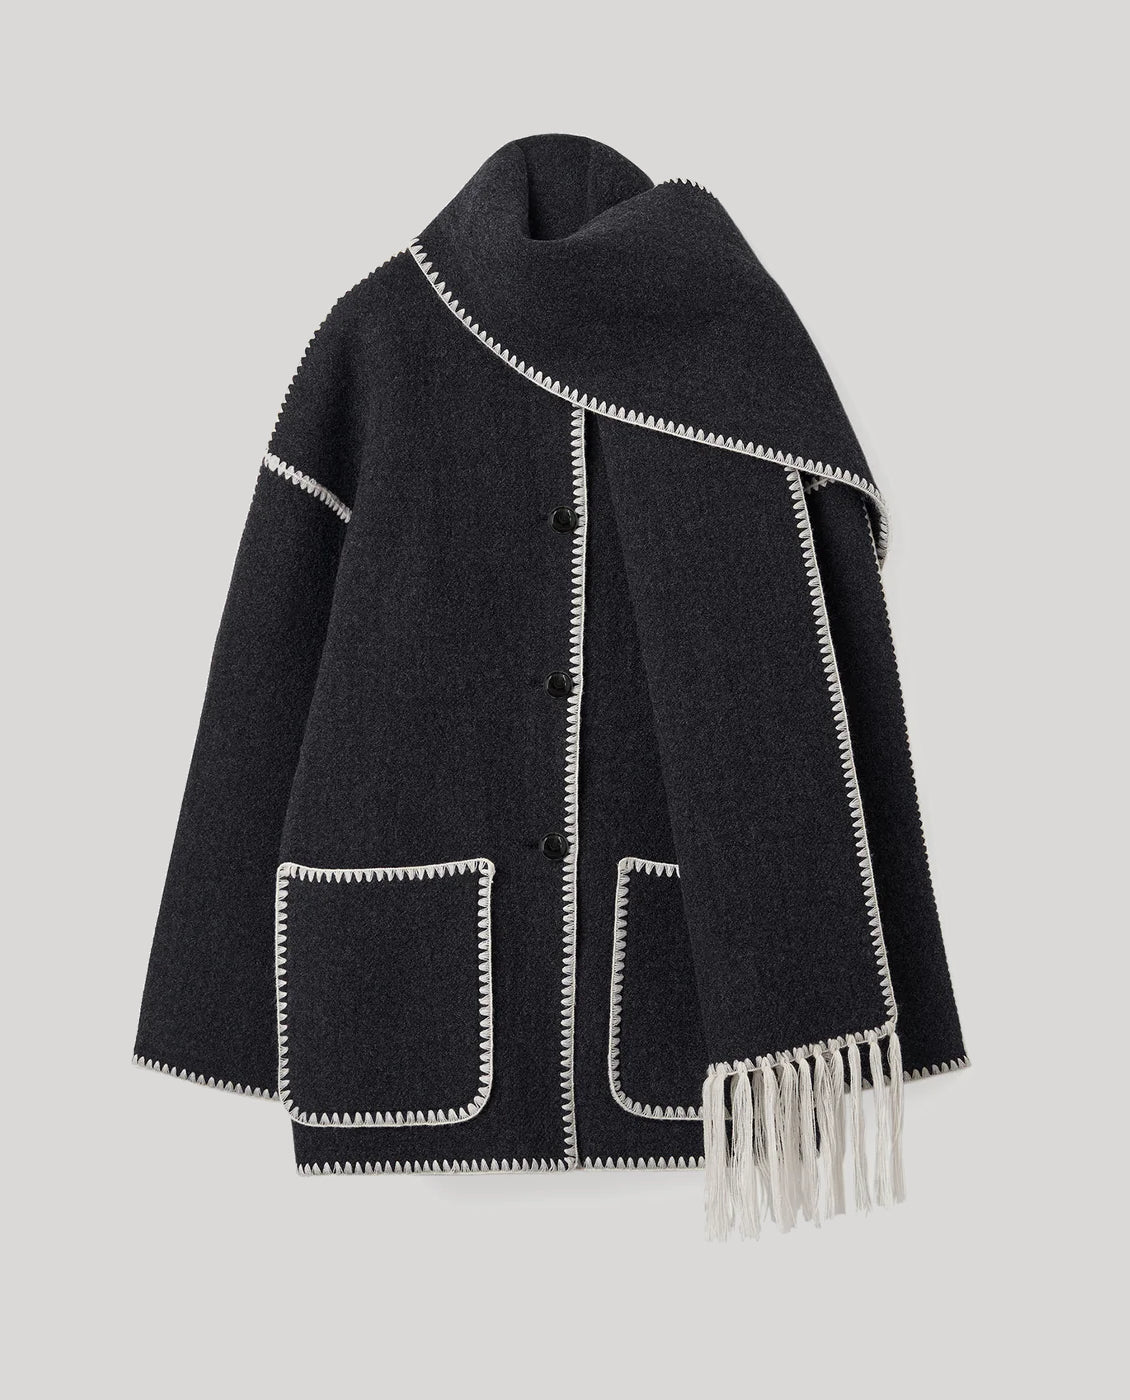 Toteme Dark Grey Melange Embroidered Scarf Jacket